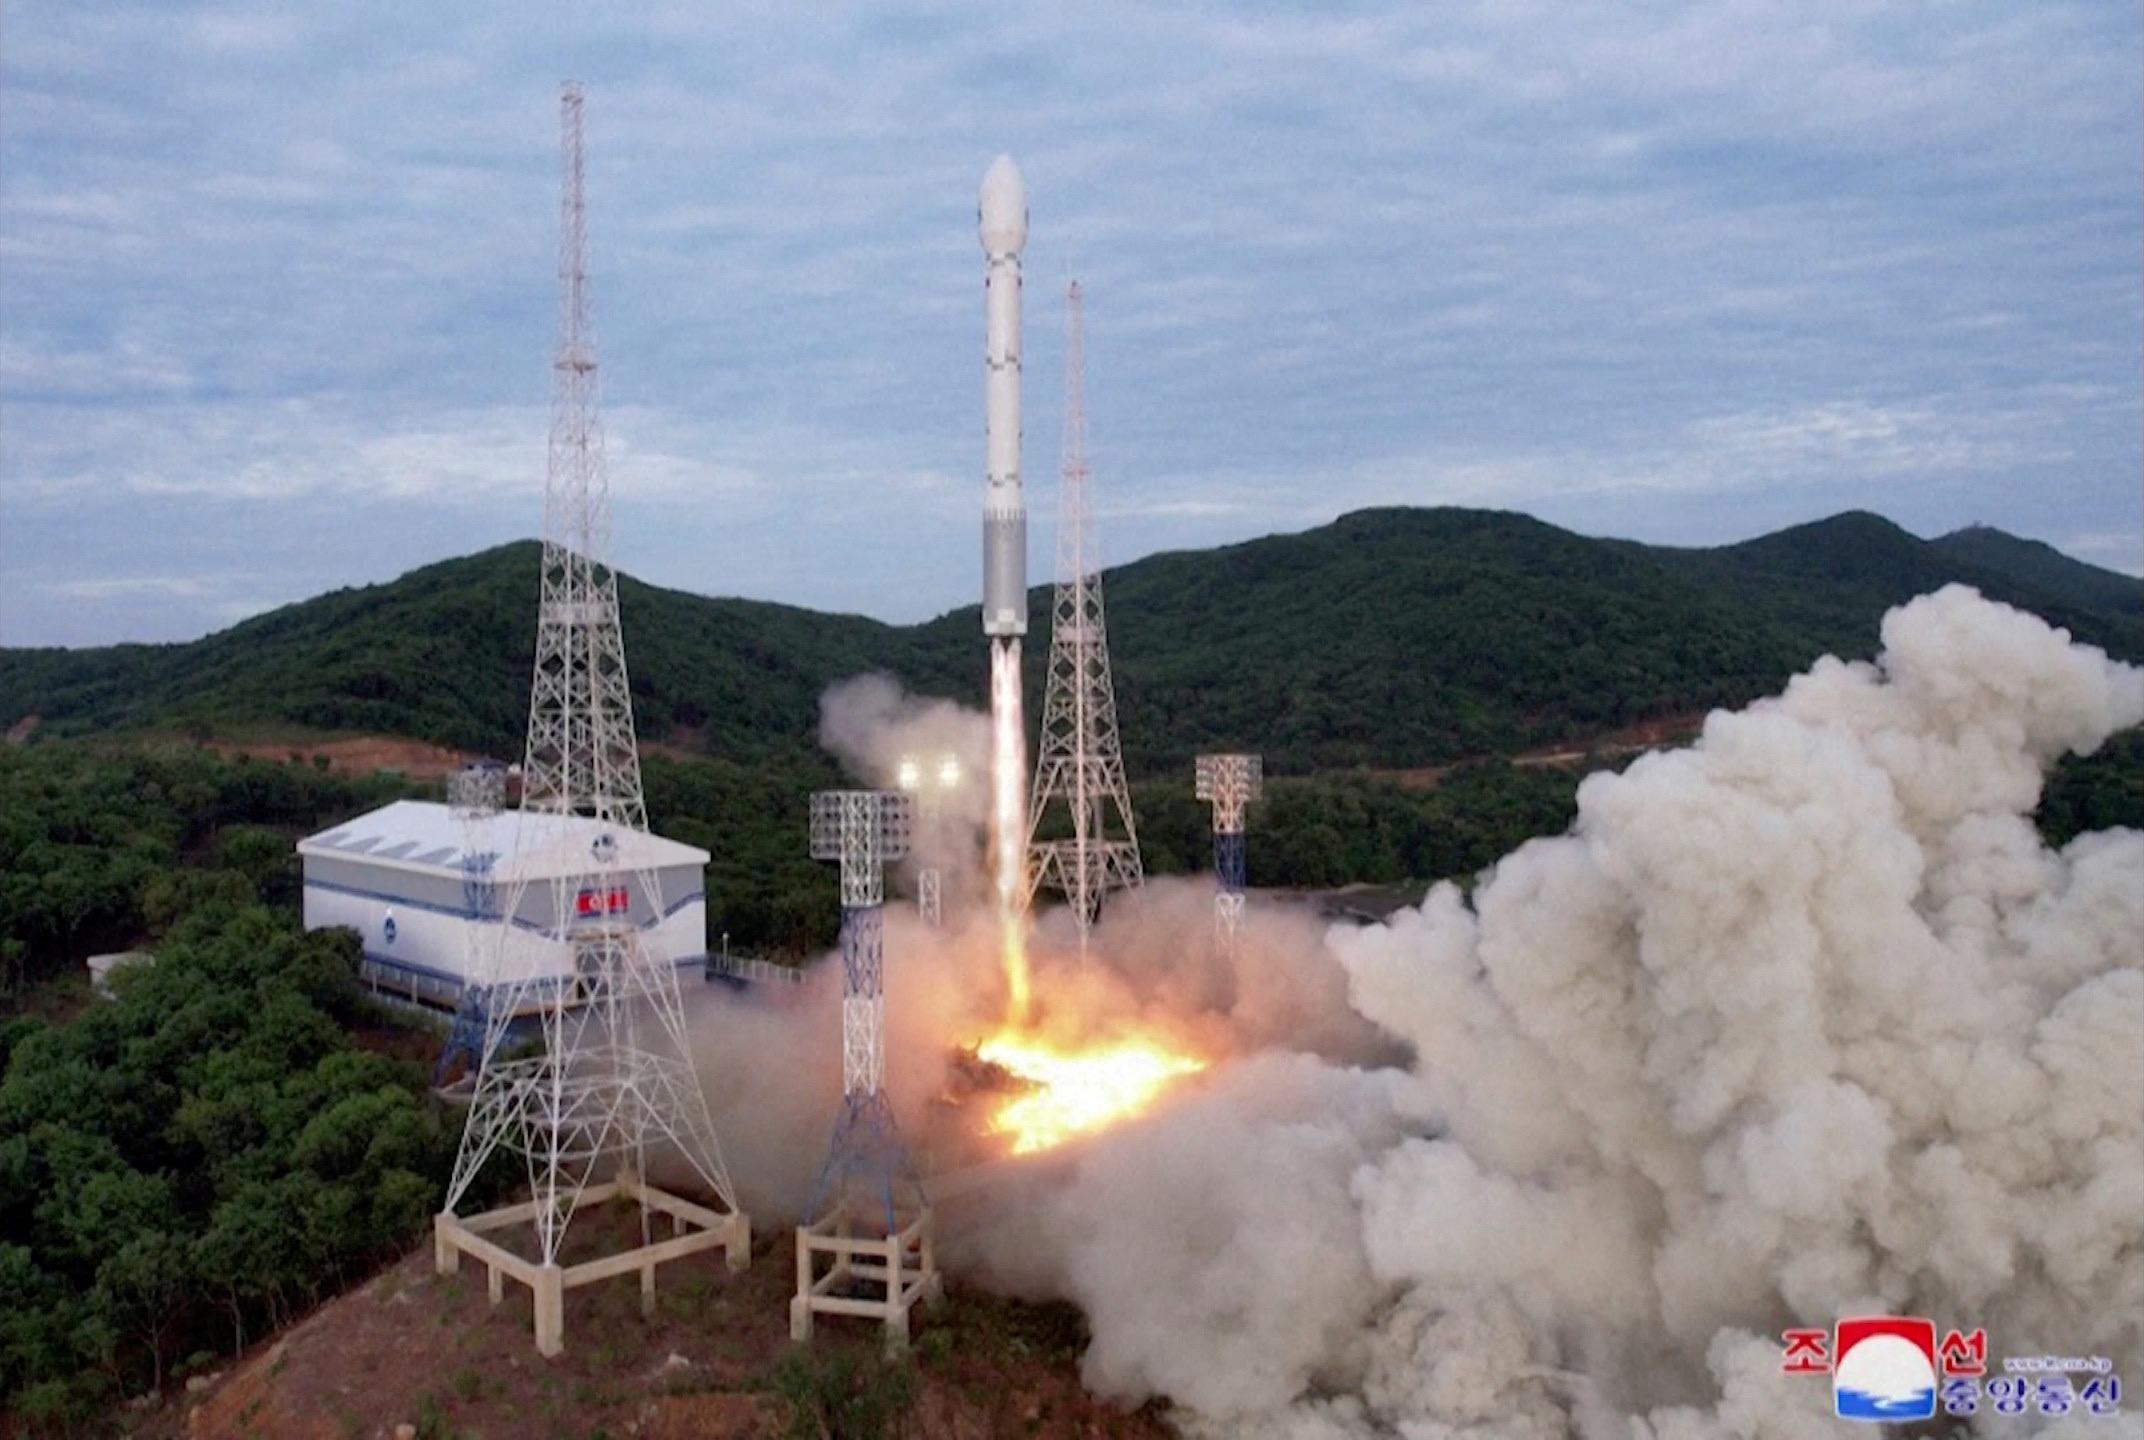 North Korea's spy satellite launch fails again - SpaceNews